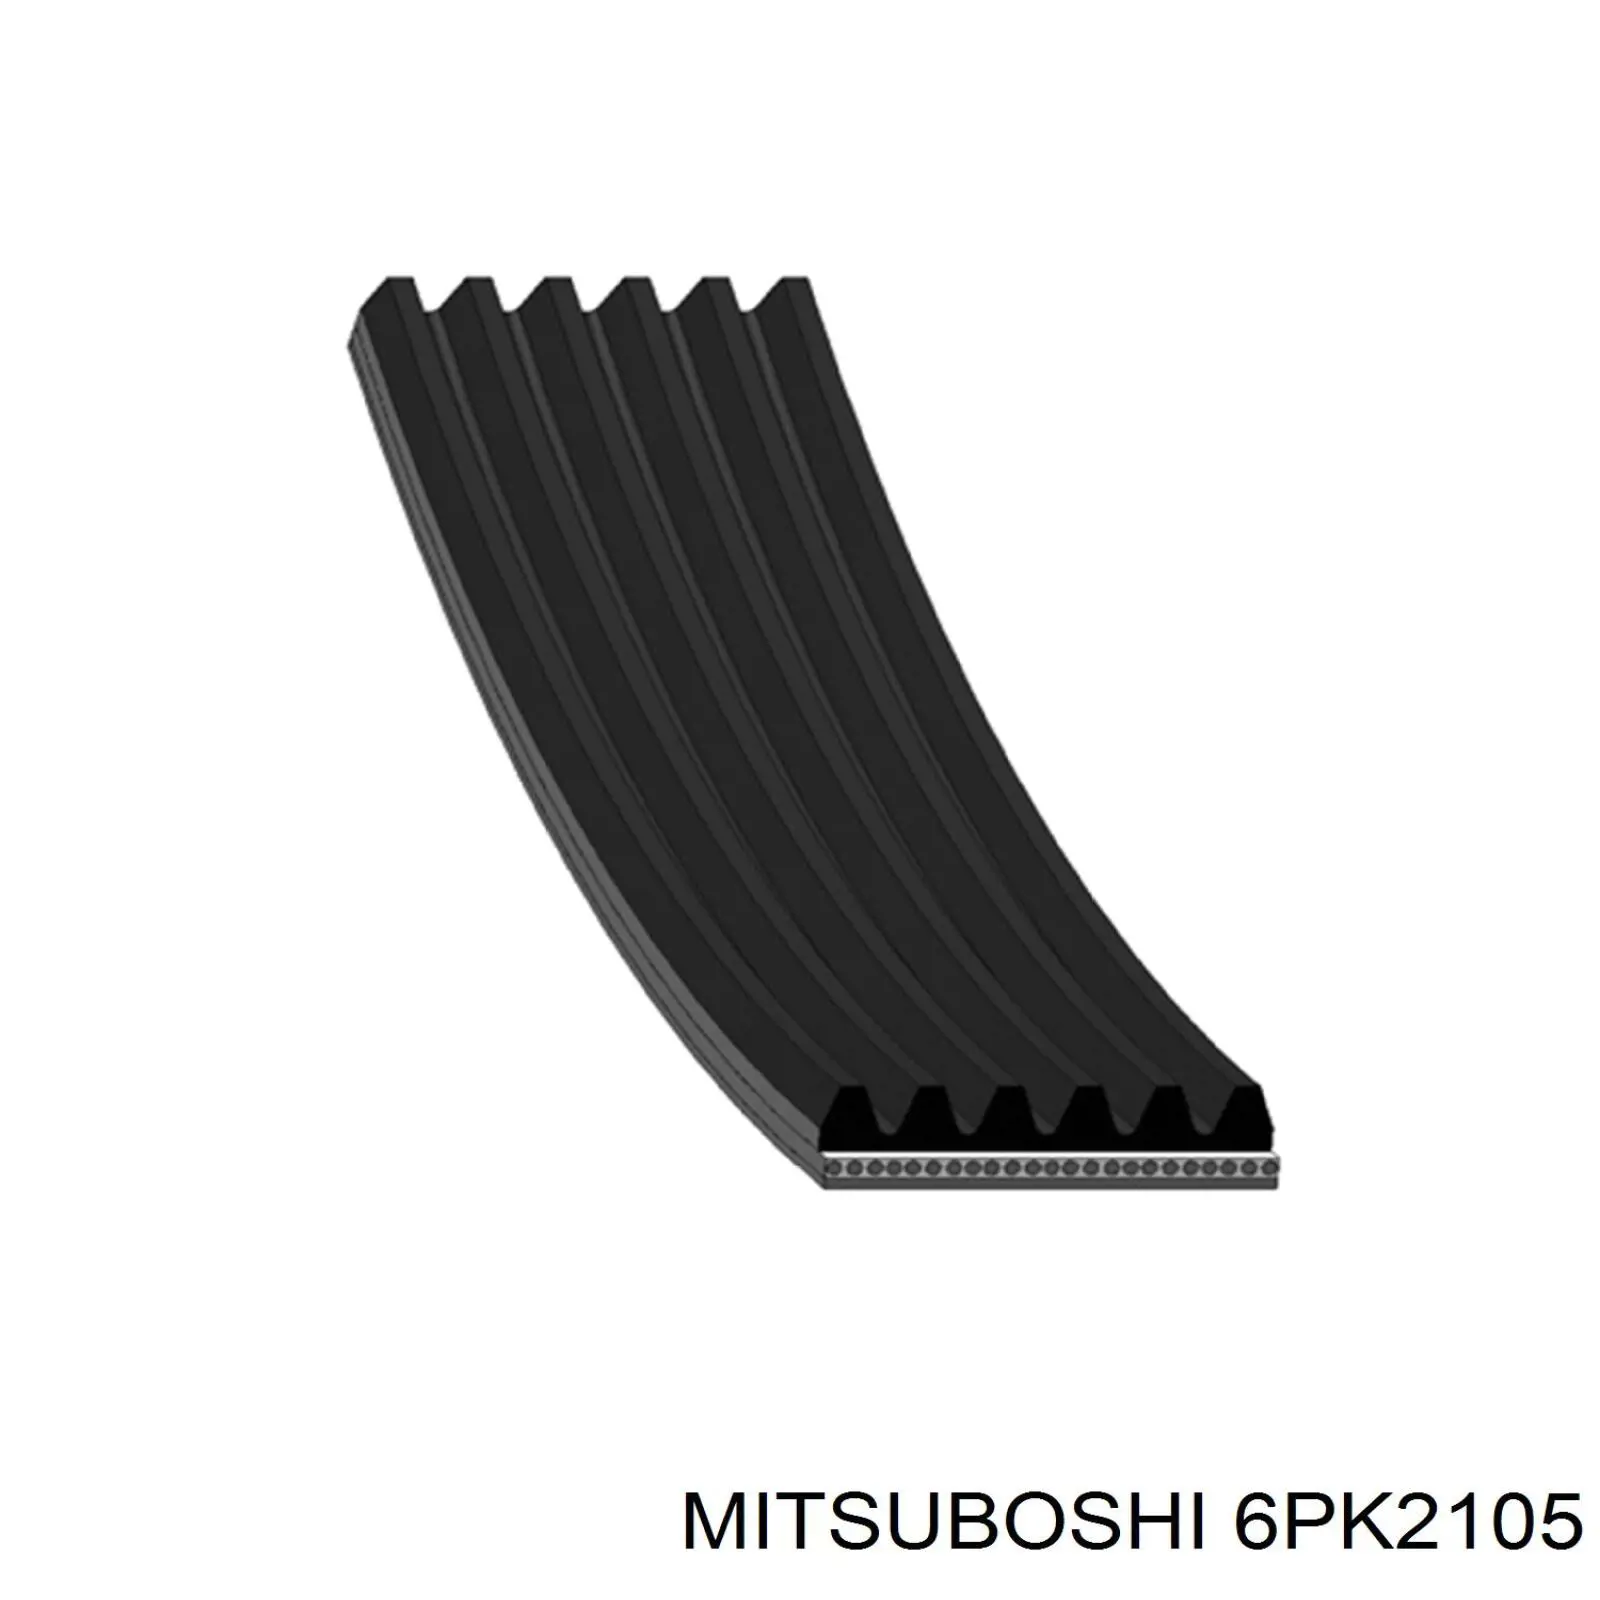 6PK2105 Mitsuboshi ремень генератора